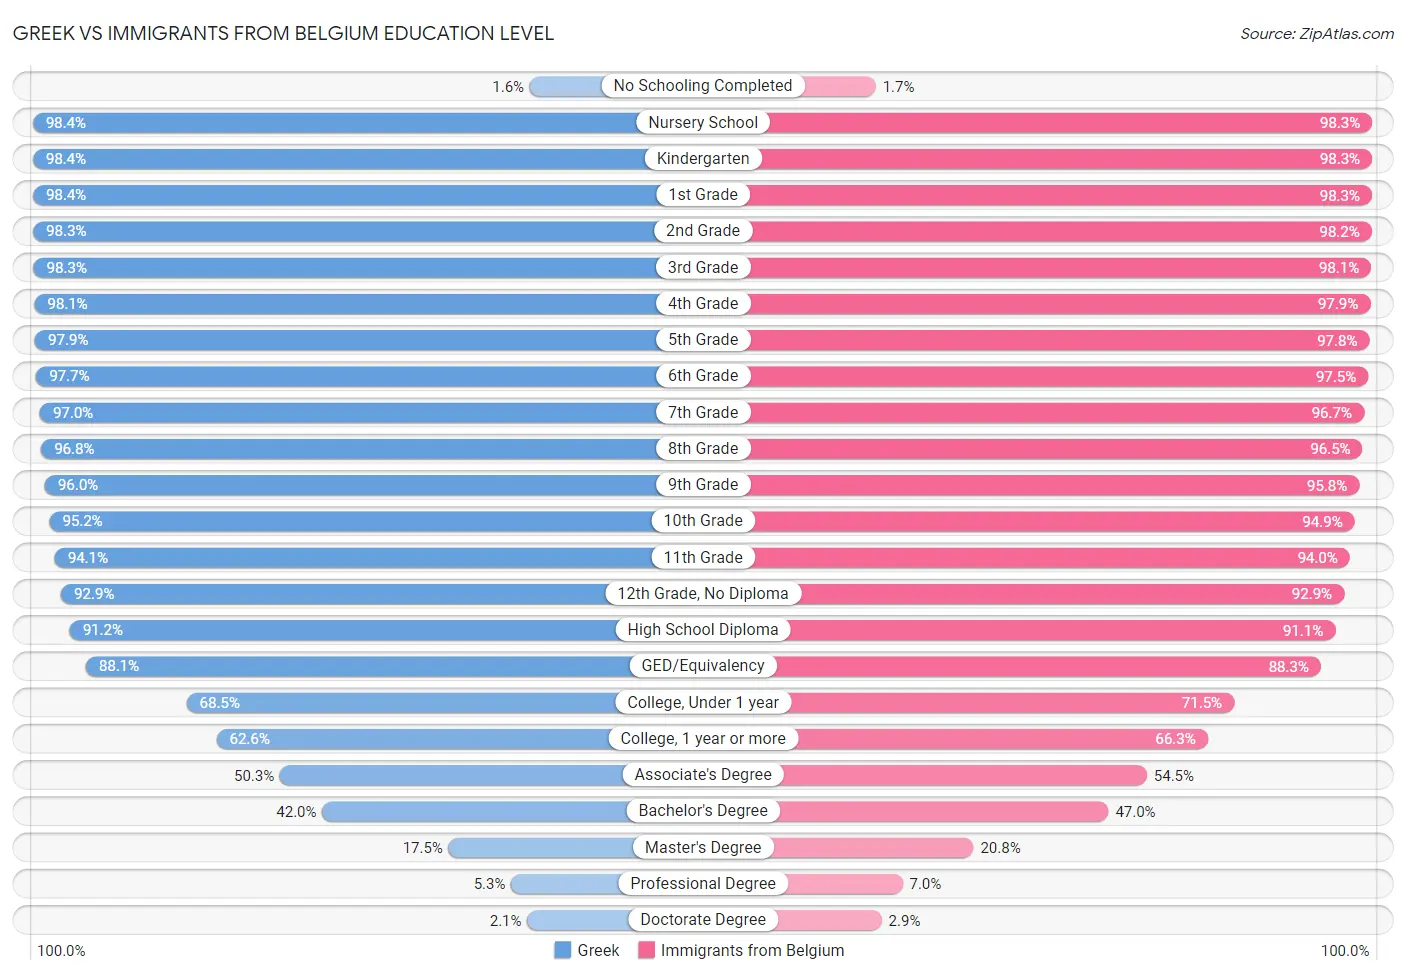 Greek vs Immigrants from Belgium Education Level